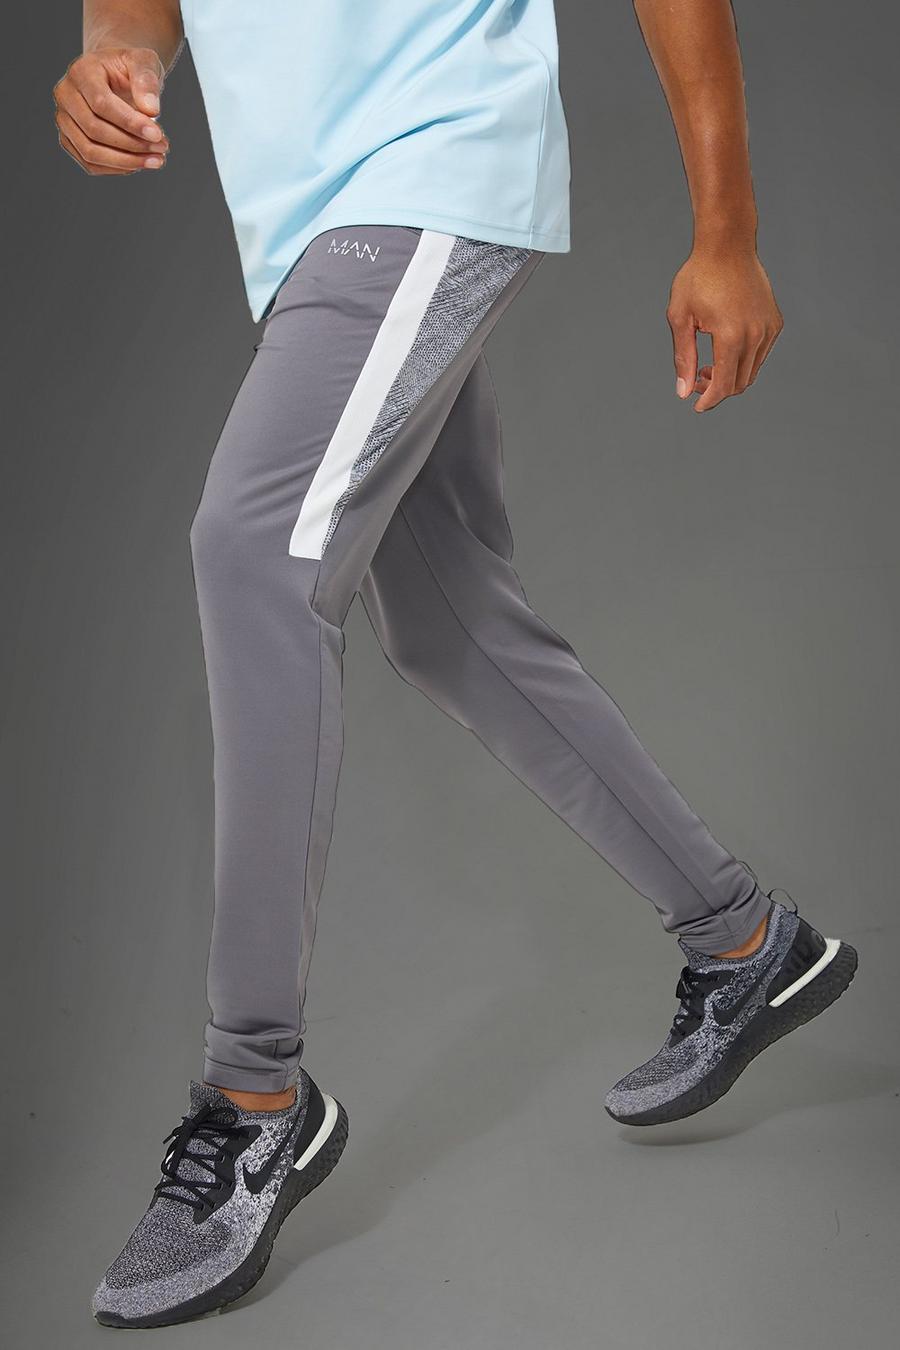 Charcoal grigio מכנסי טרנינג ספורטיביים לאימונים עם פאנל ודוגמה מסדרת Man